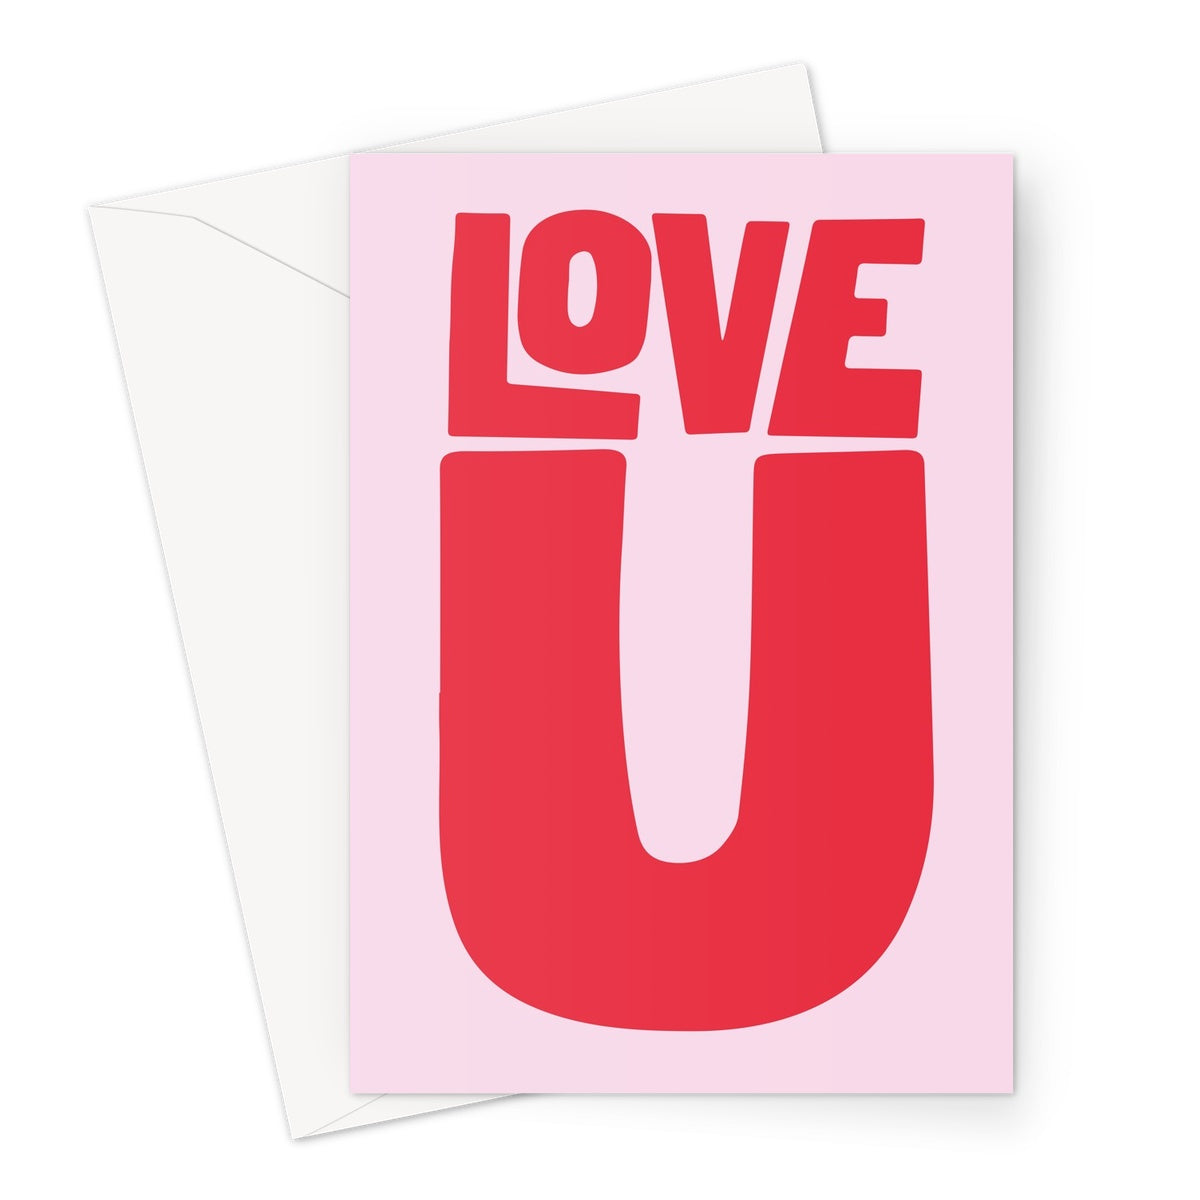 LOVE U - Pink / Red Greeting Card